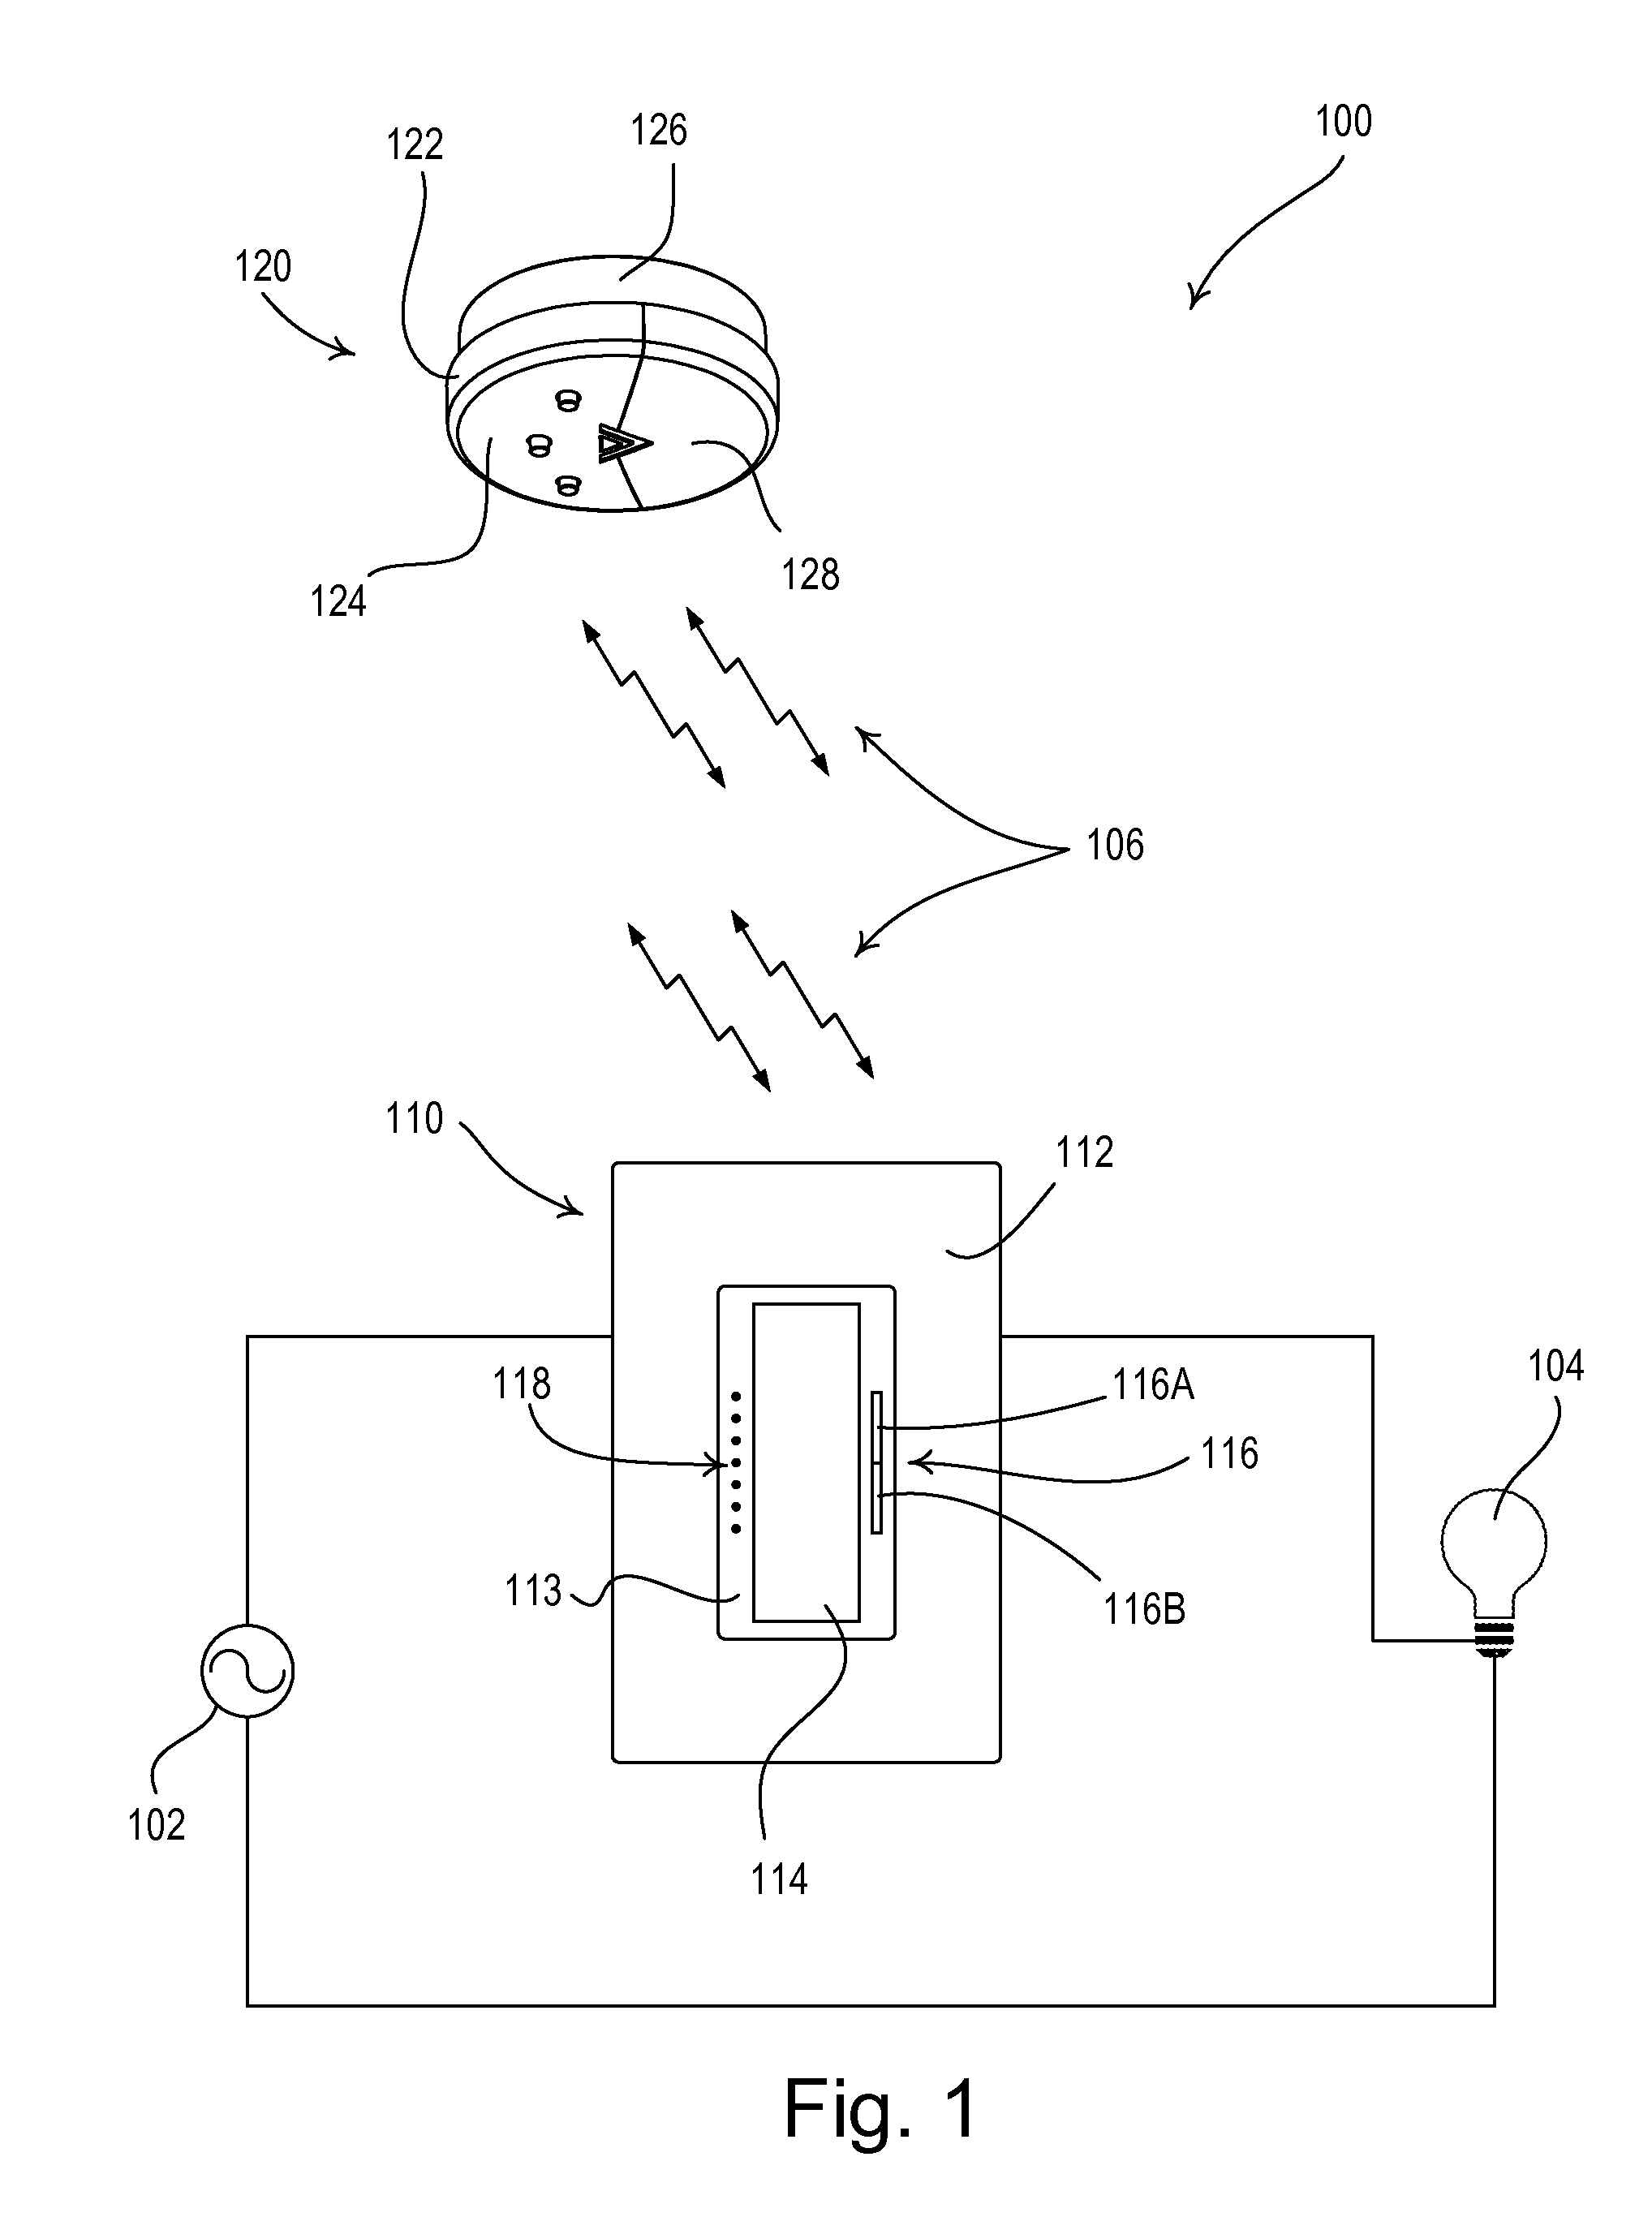 Method of Calibrating a Daylight Sensor